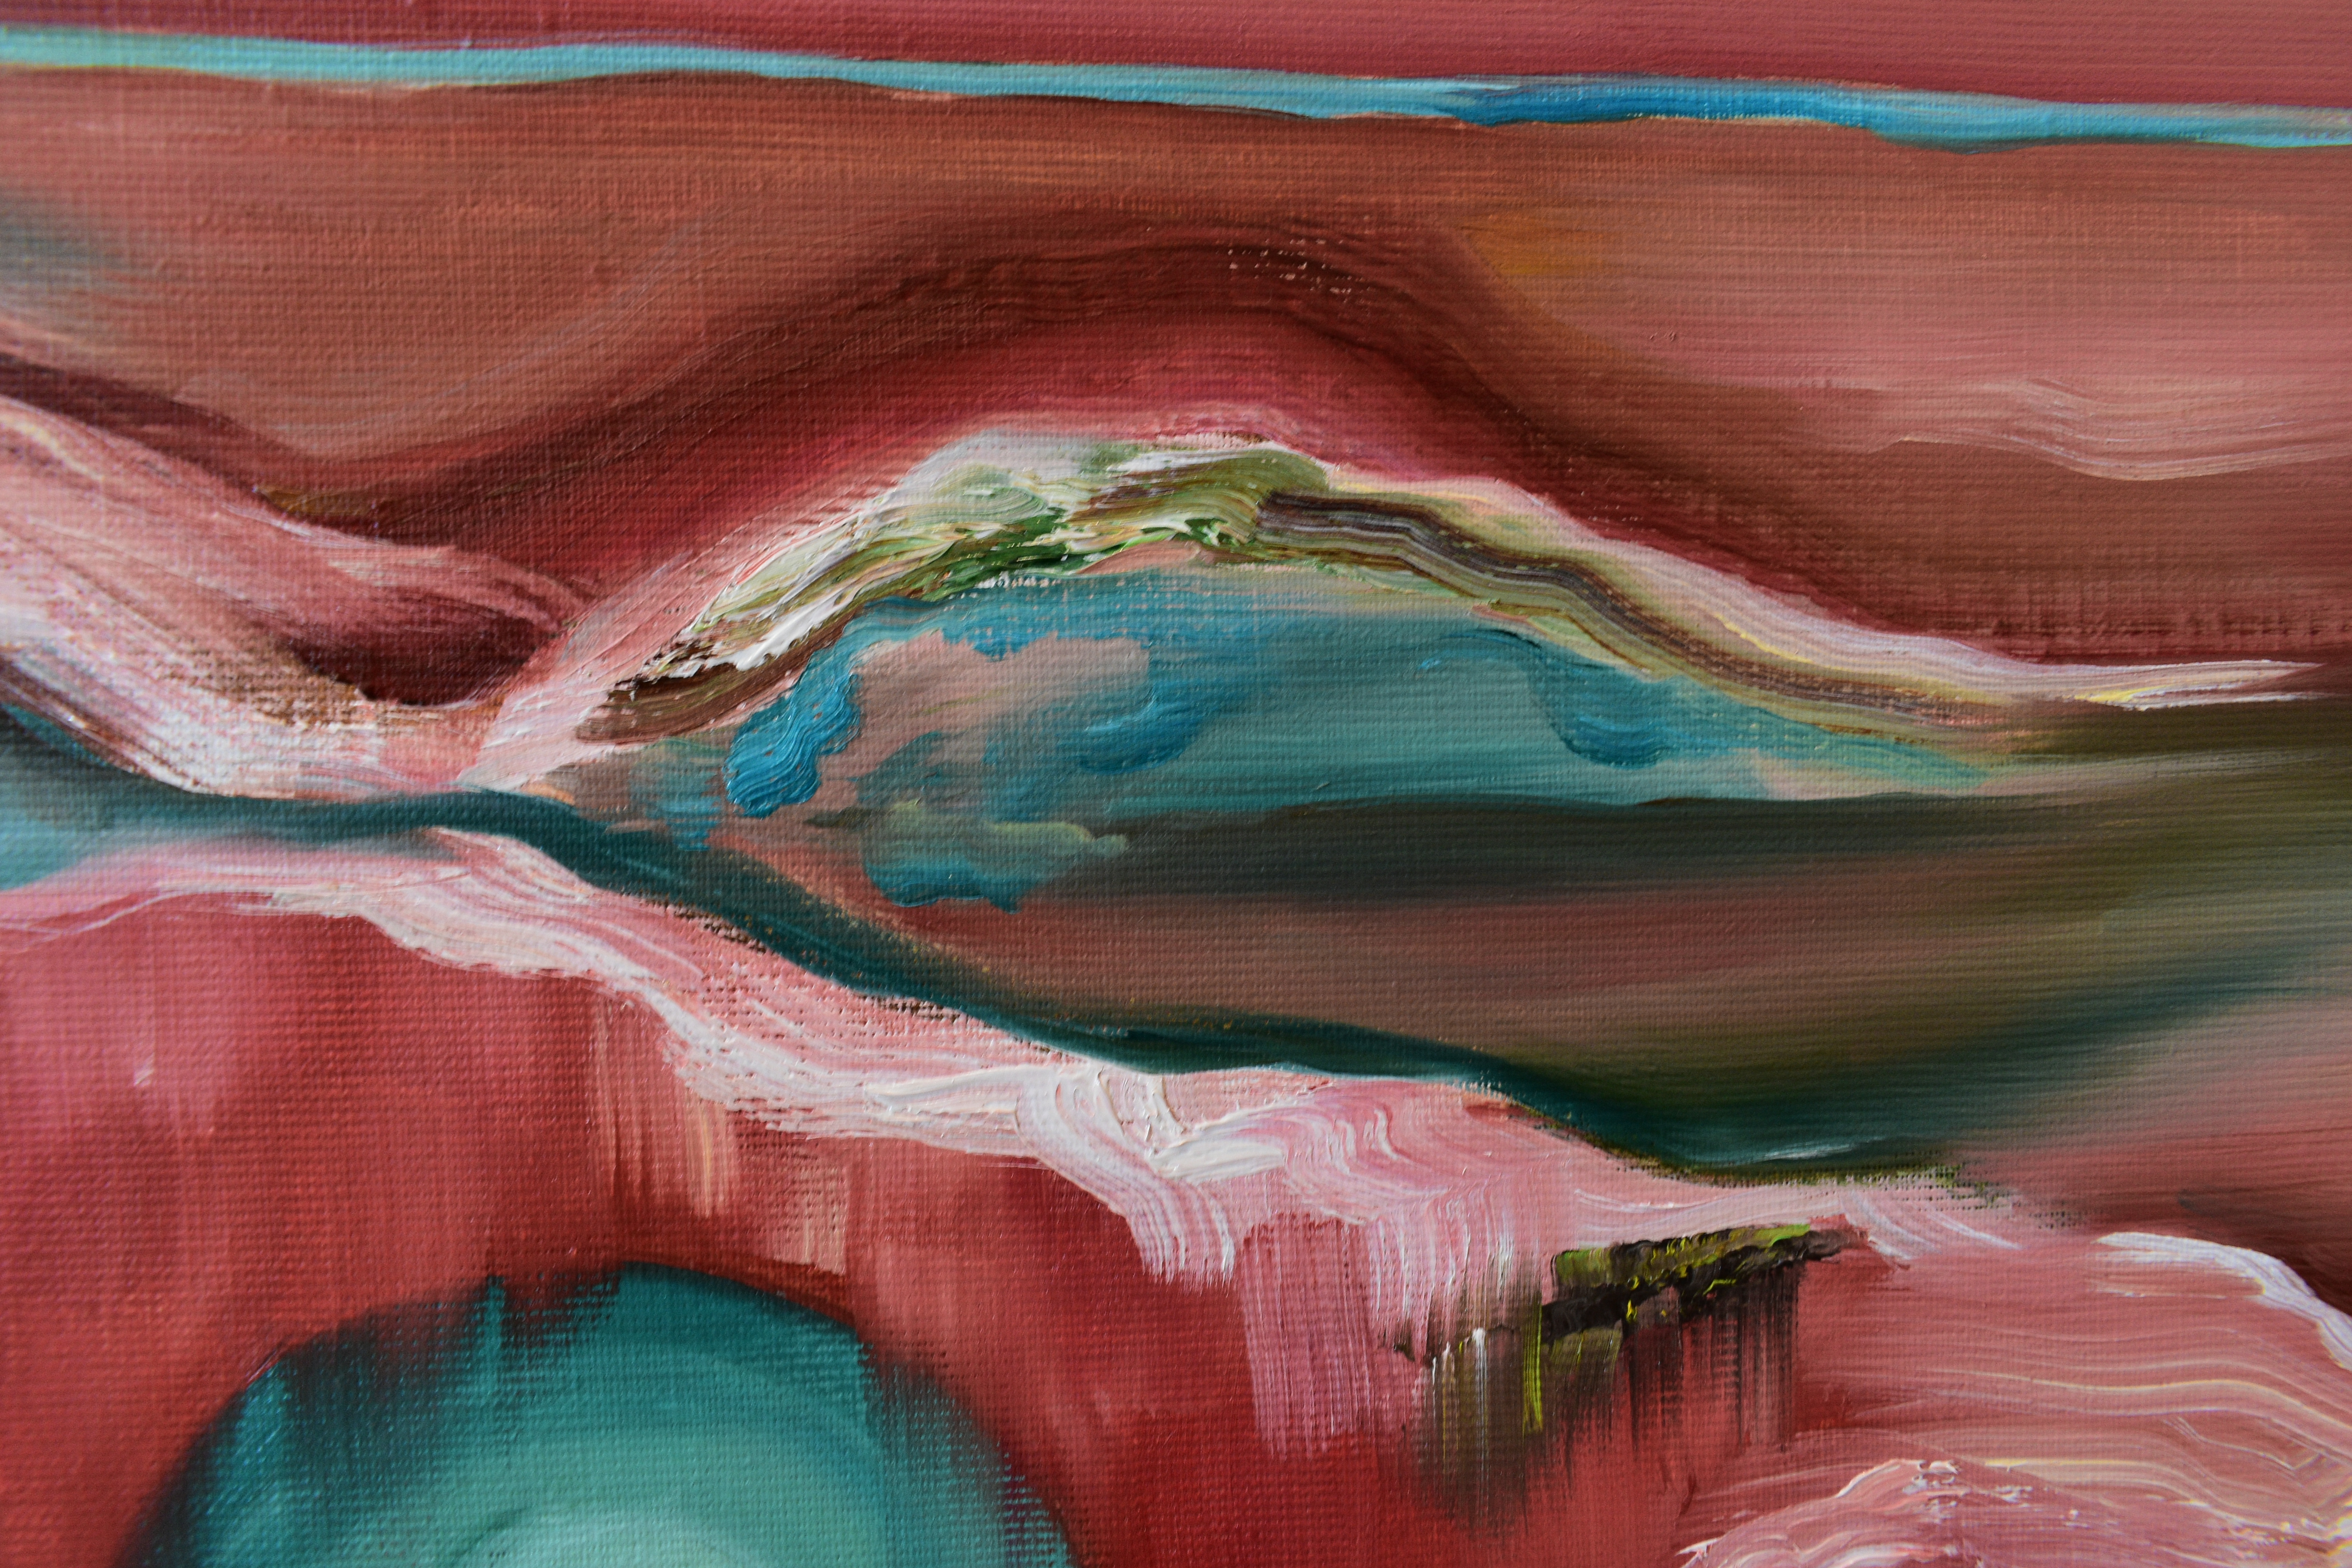 Painting by Marina Venediktova Emerald evening detail